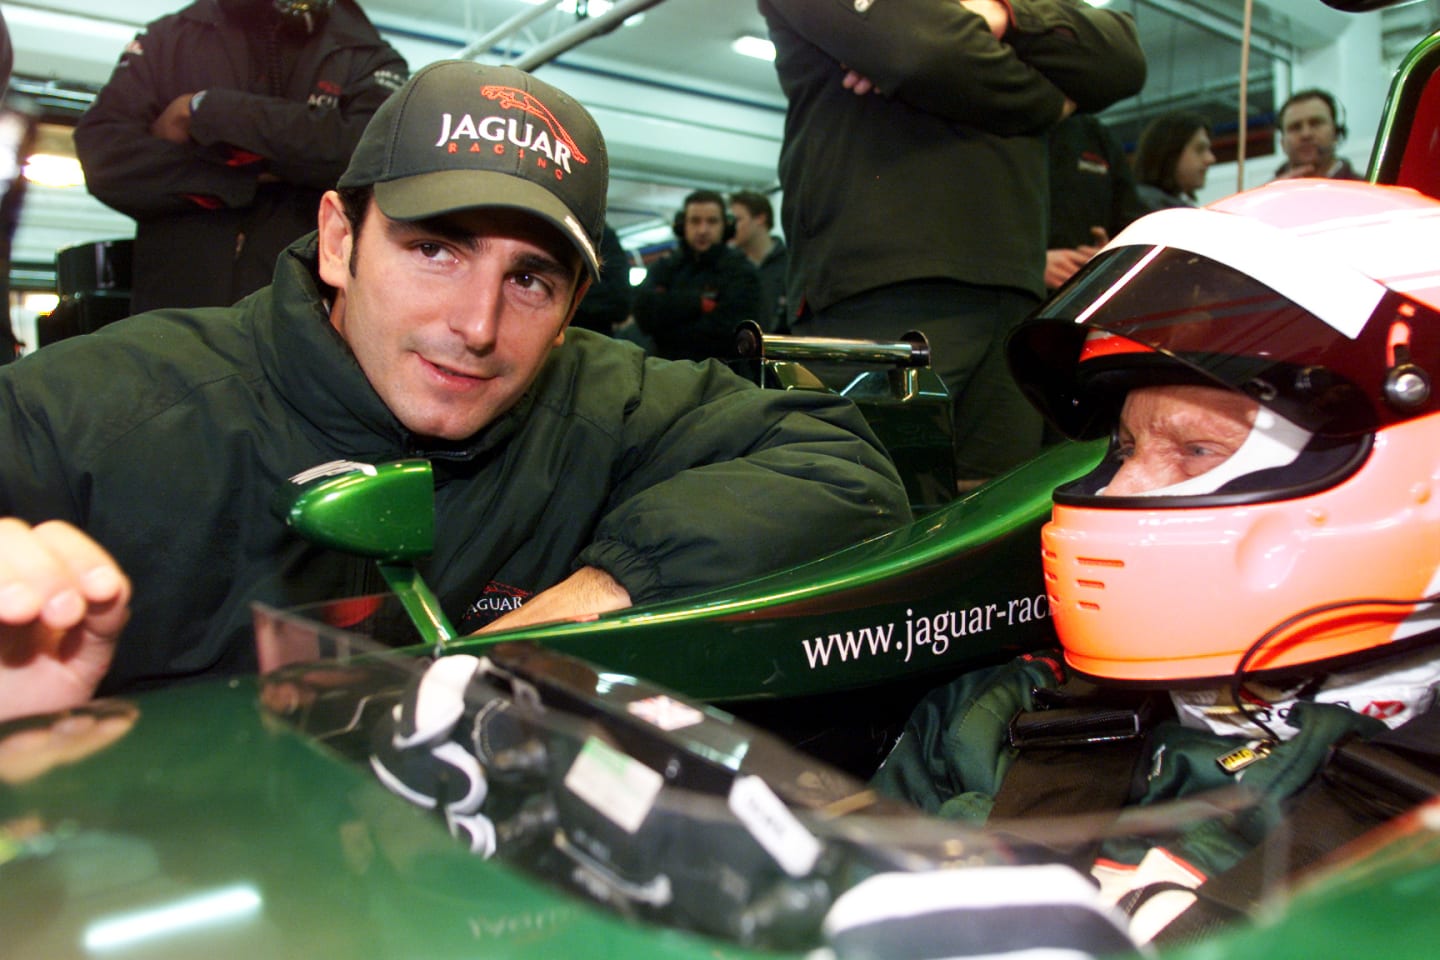 "14 Jan 2002:  Jaguar Racing team principle Niki Lauda prepares to test the car out and shares his